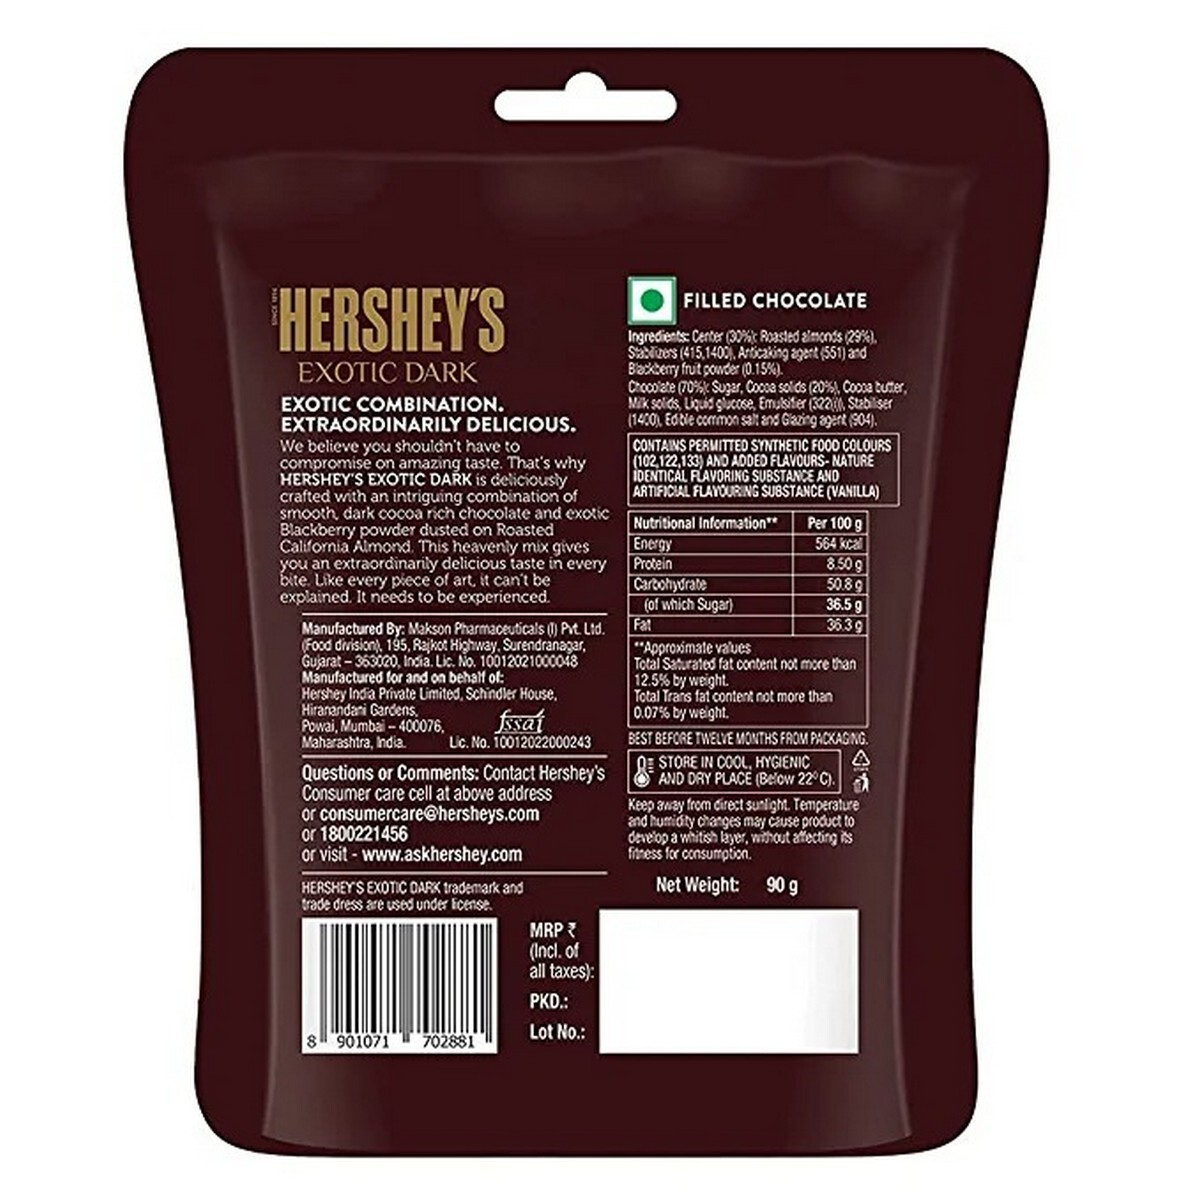 H/Exotic Dark Chocolate Almond Blackbery Flavour 90g